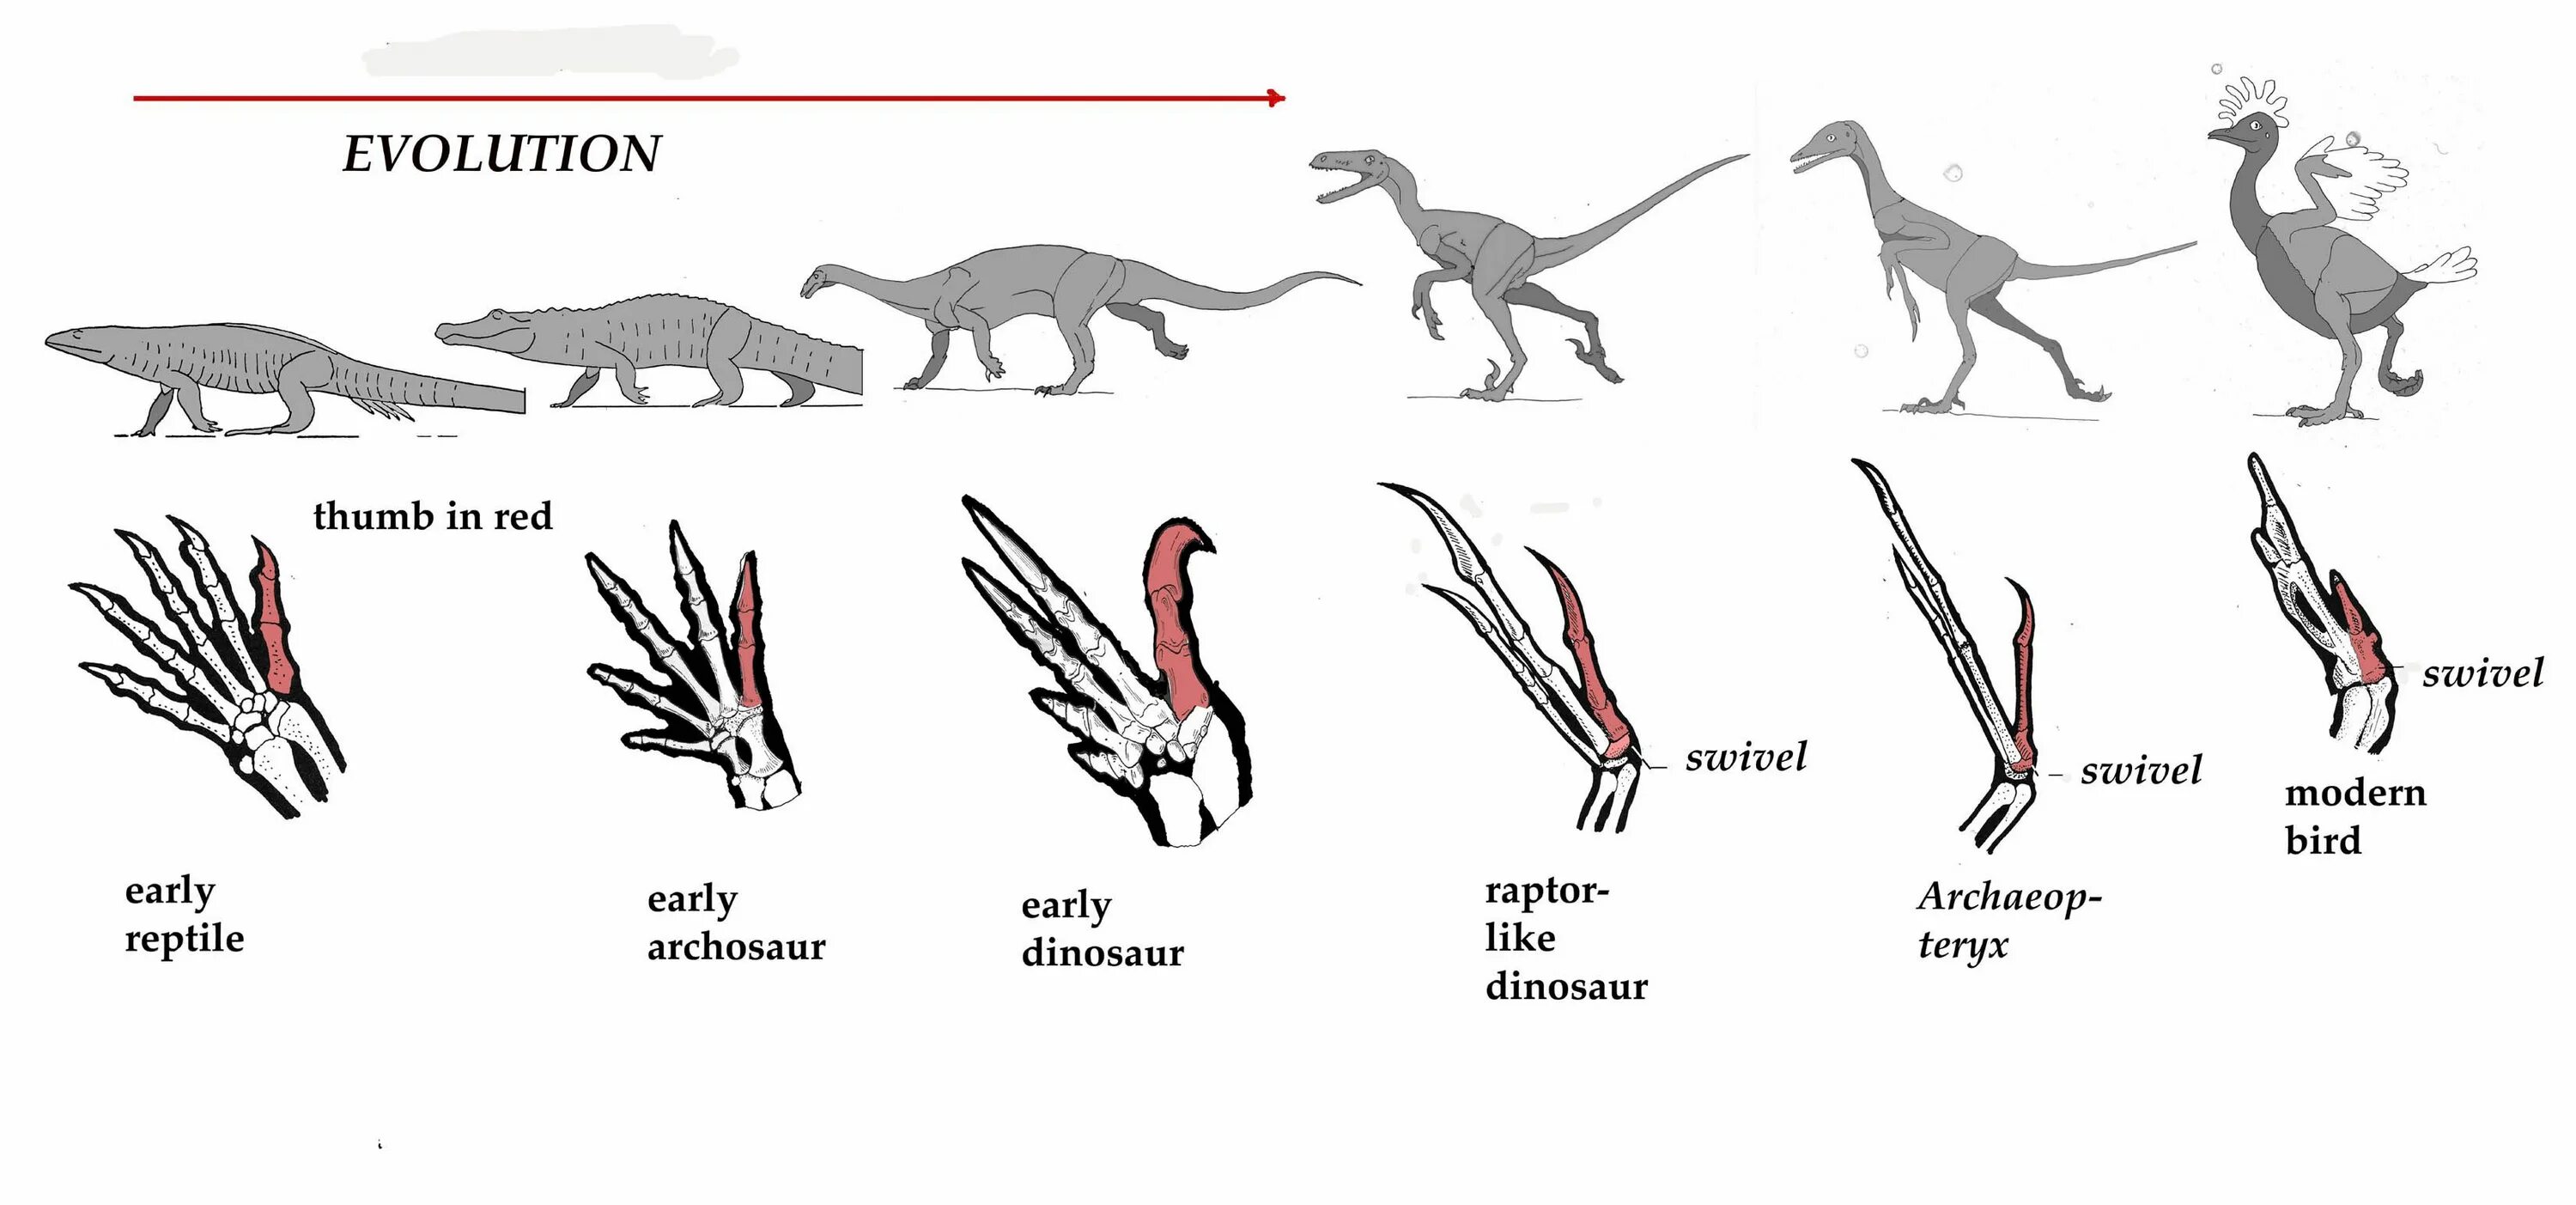 Динозавры развитие. Археоптерикс Эволюция птиц. Эволюция птиц от динозавров. Филогенетический ряд птиц. Эволюция крыльев птиц.